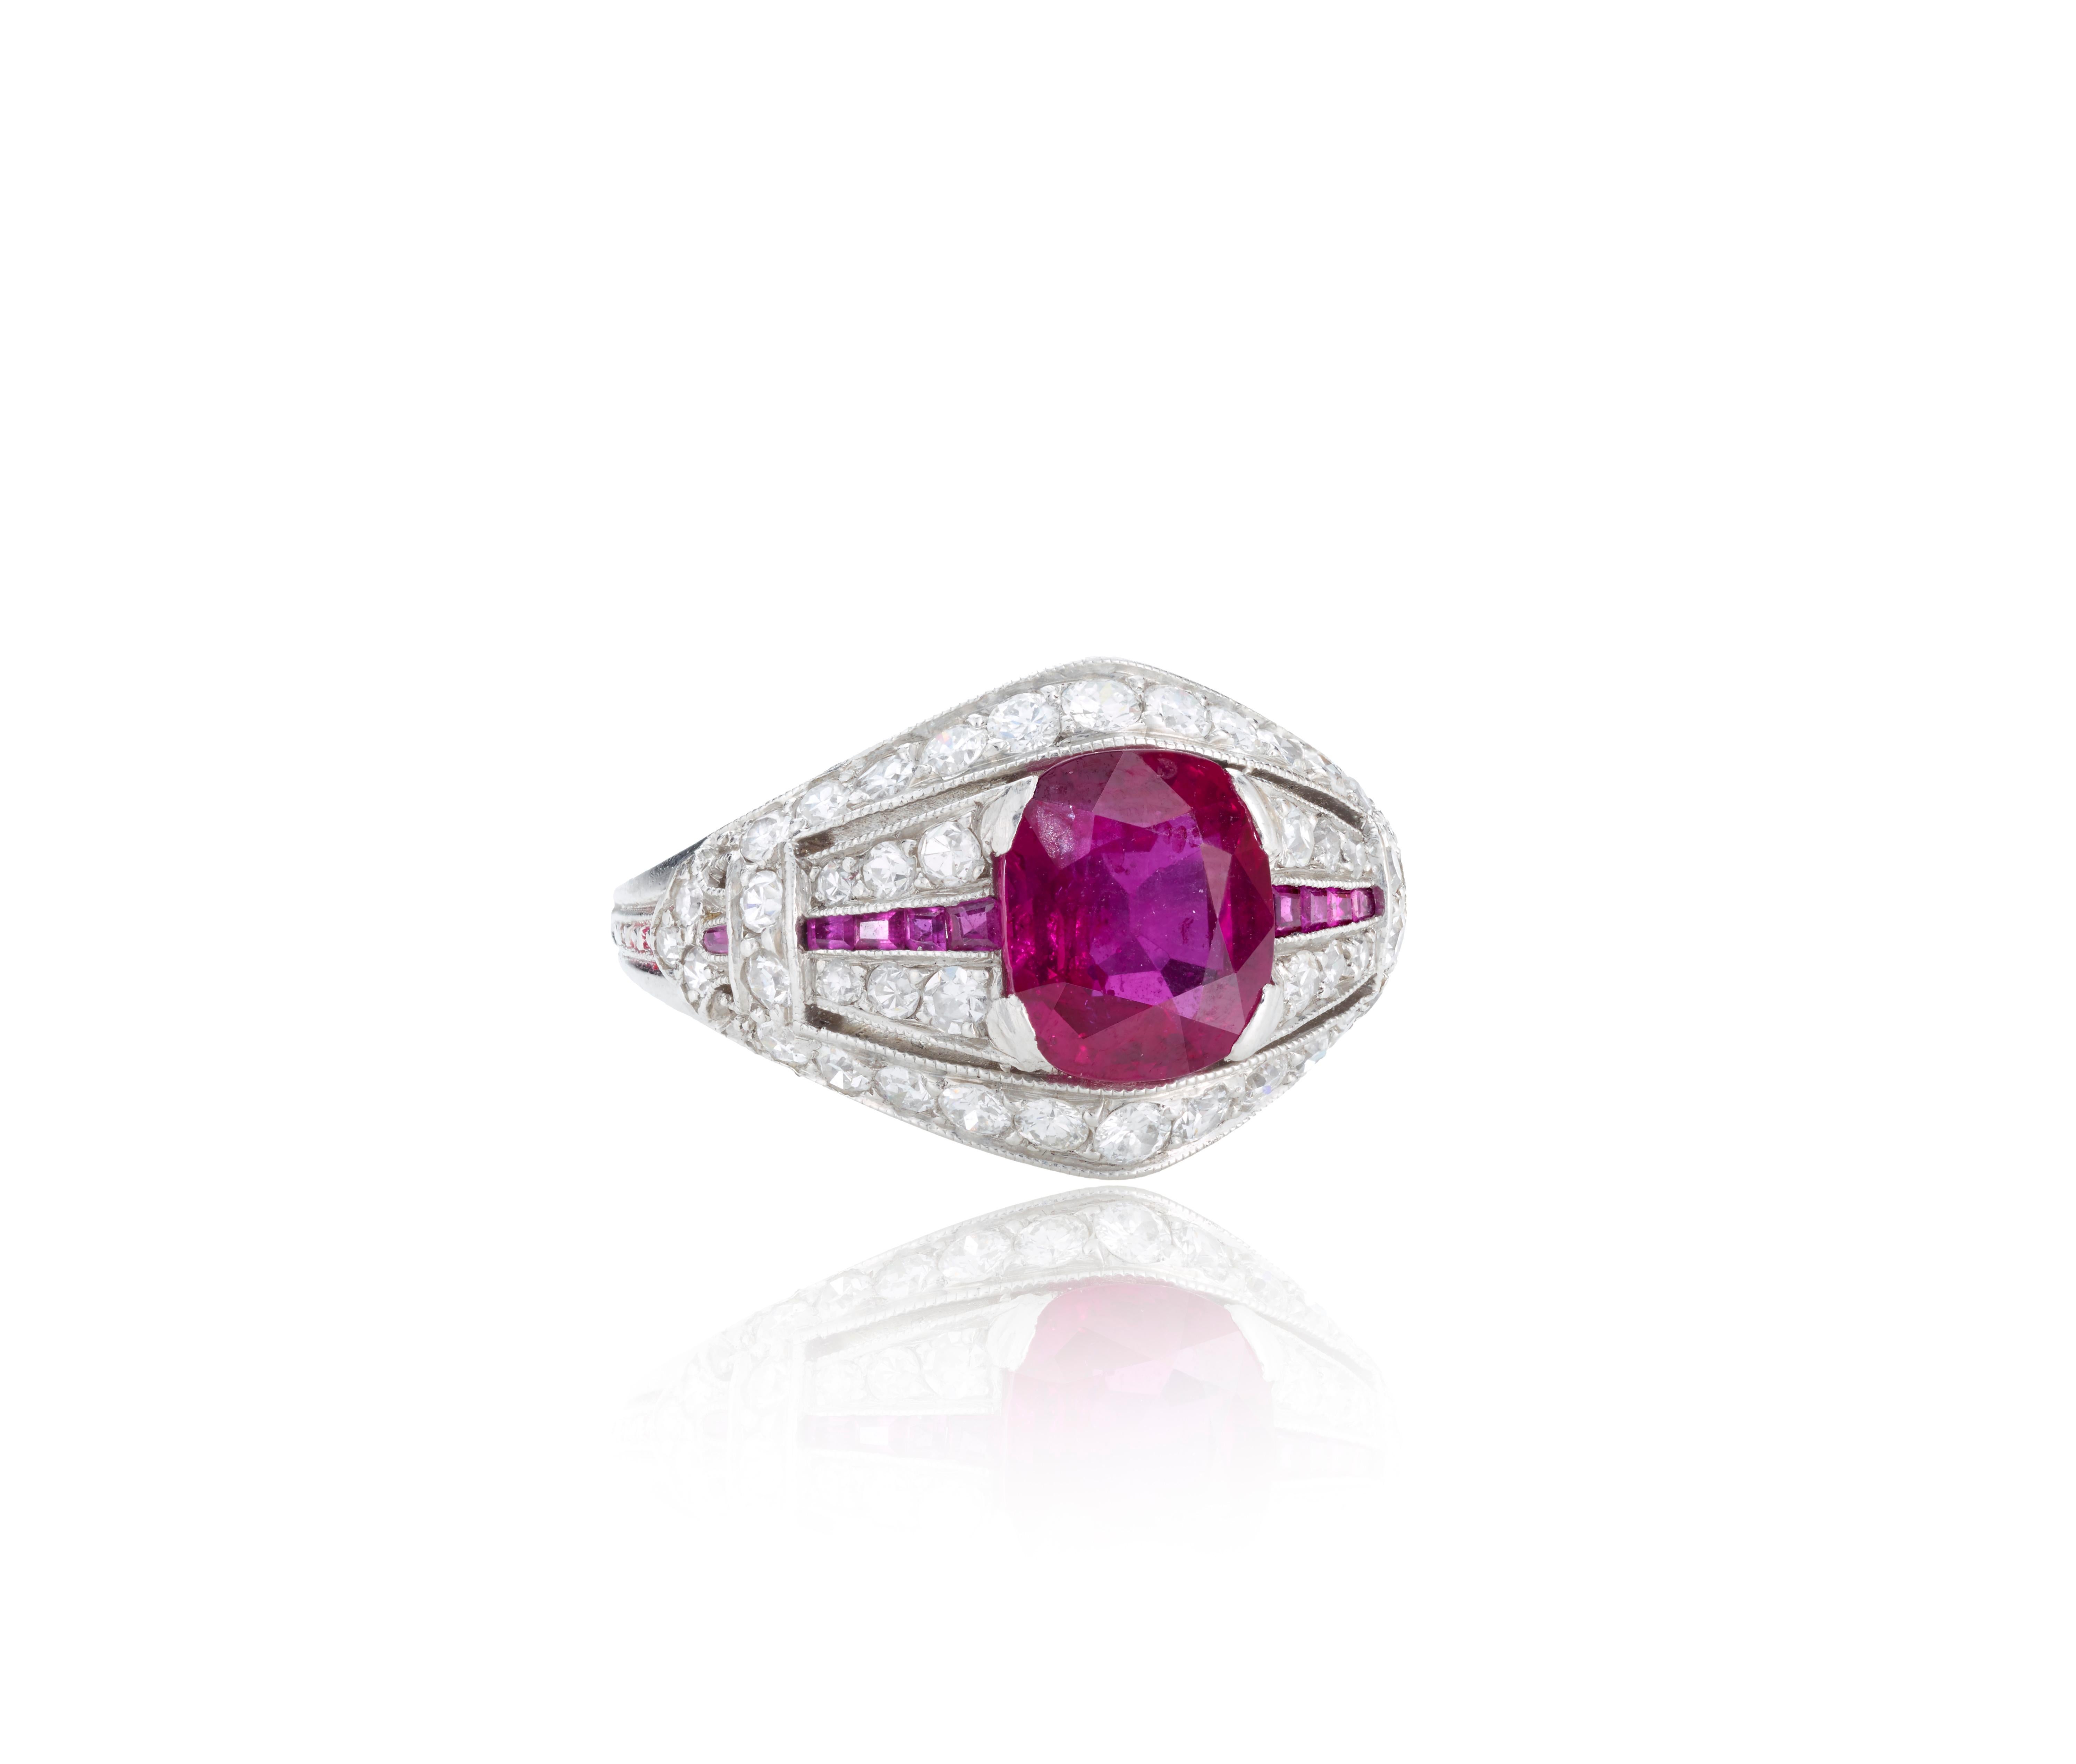 An Art Deco platinum and ruby and bead-set diamond ring with calibré-cut rubies, circa 1930.

Ring contains one cushion-cut medium-dark, vivid red ruby (total carat weight: 1.97 carats), 44 single cut diamonds (total carat weight: 1.10 carats,